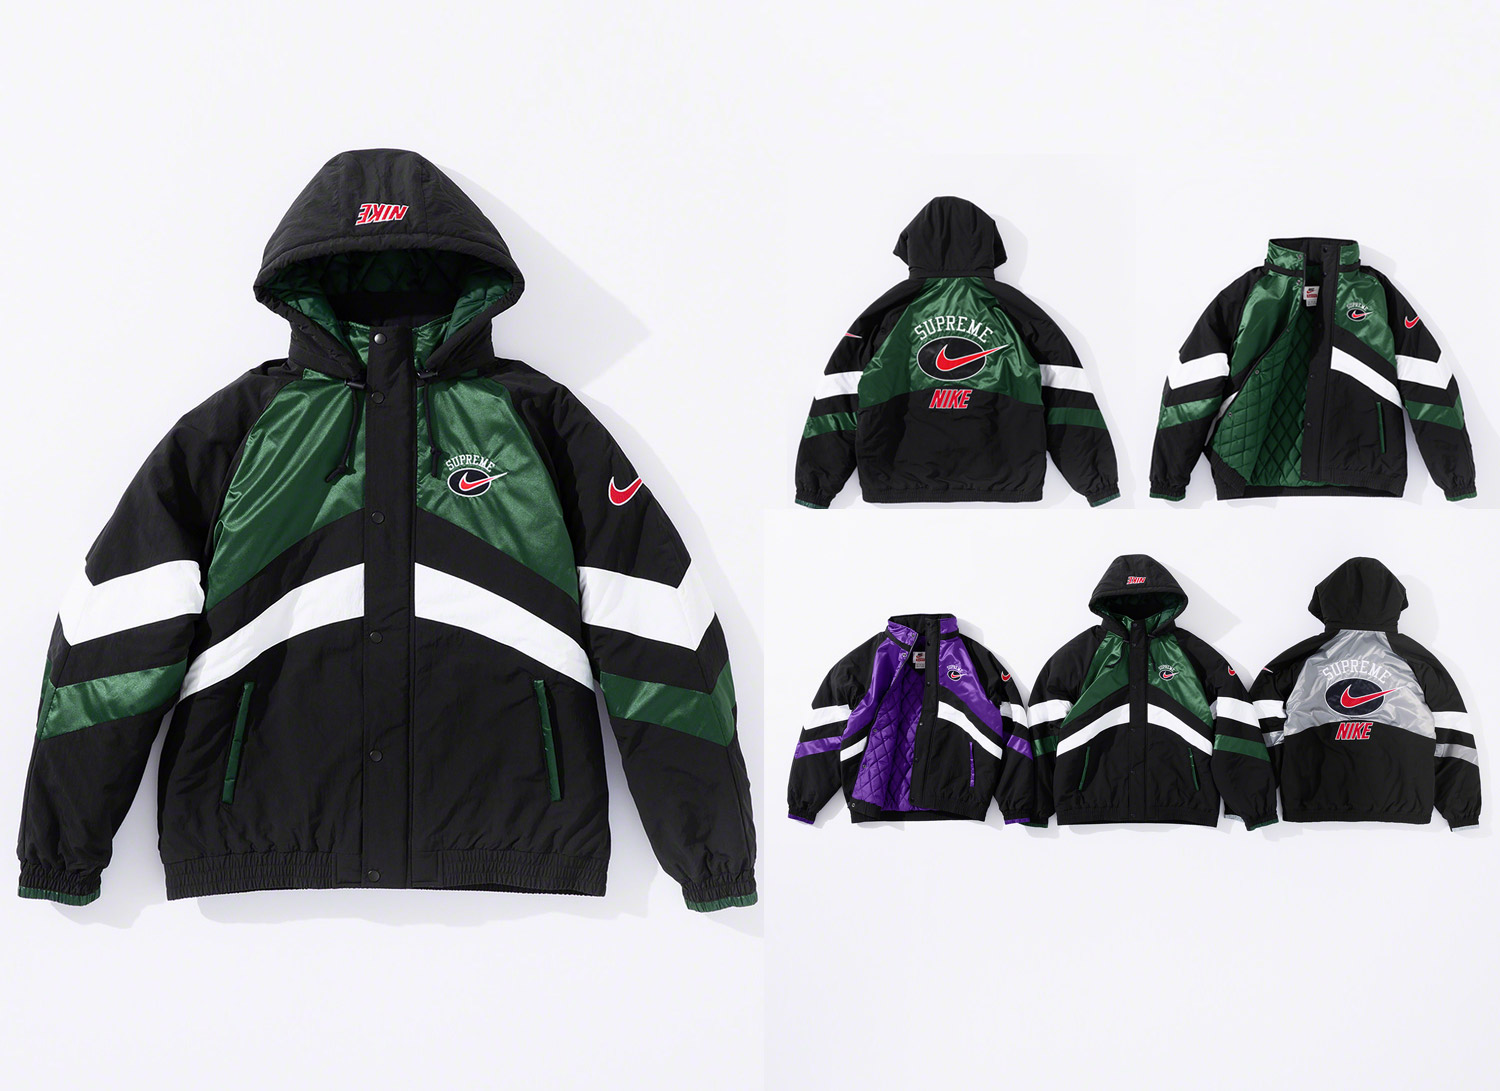 Supreme®/Nike® Hooded Sport Jacket